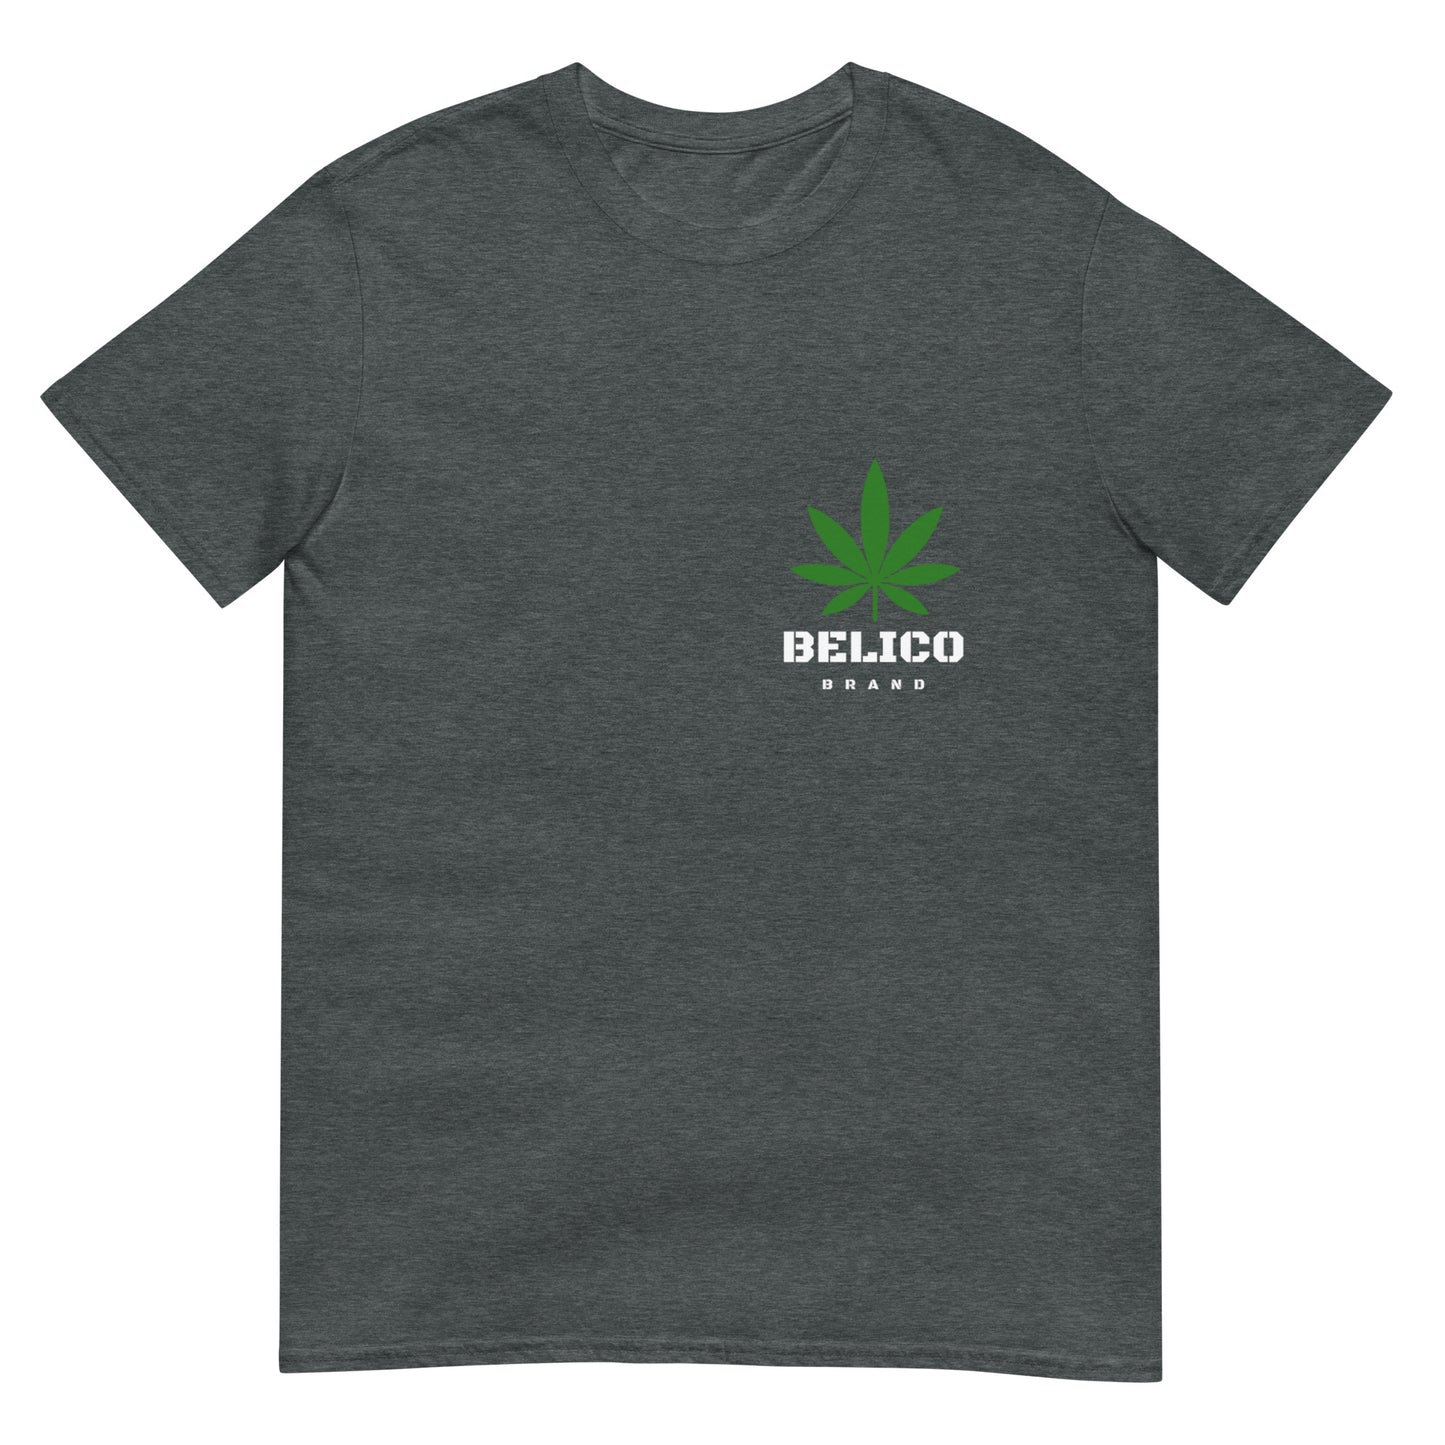 Belico Grass- T-Shirt